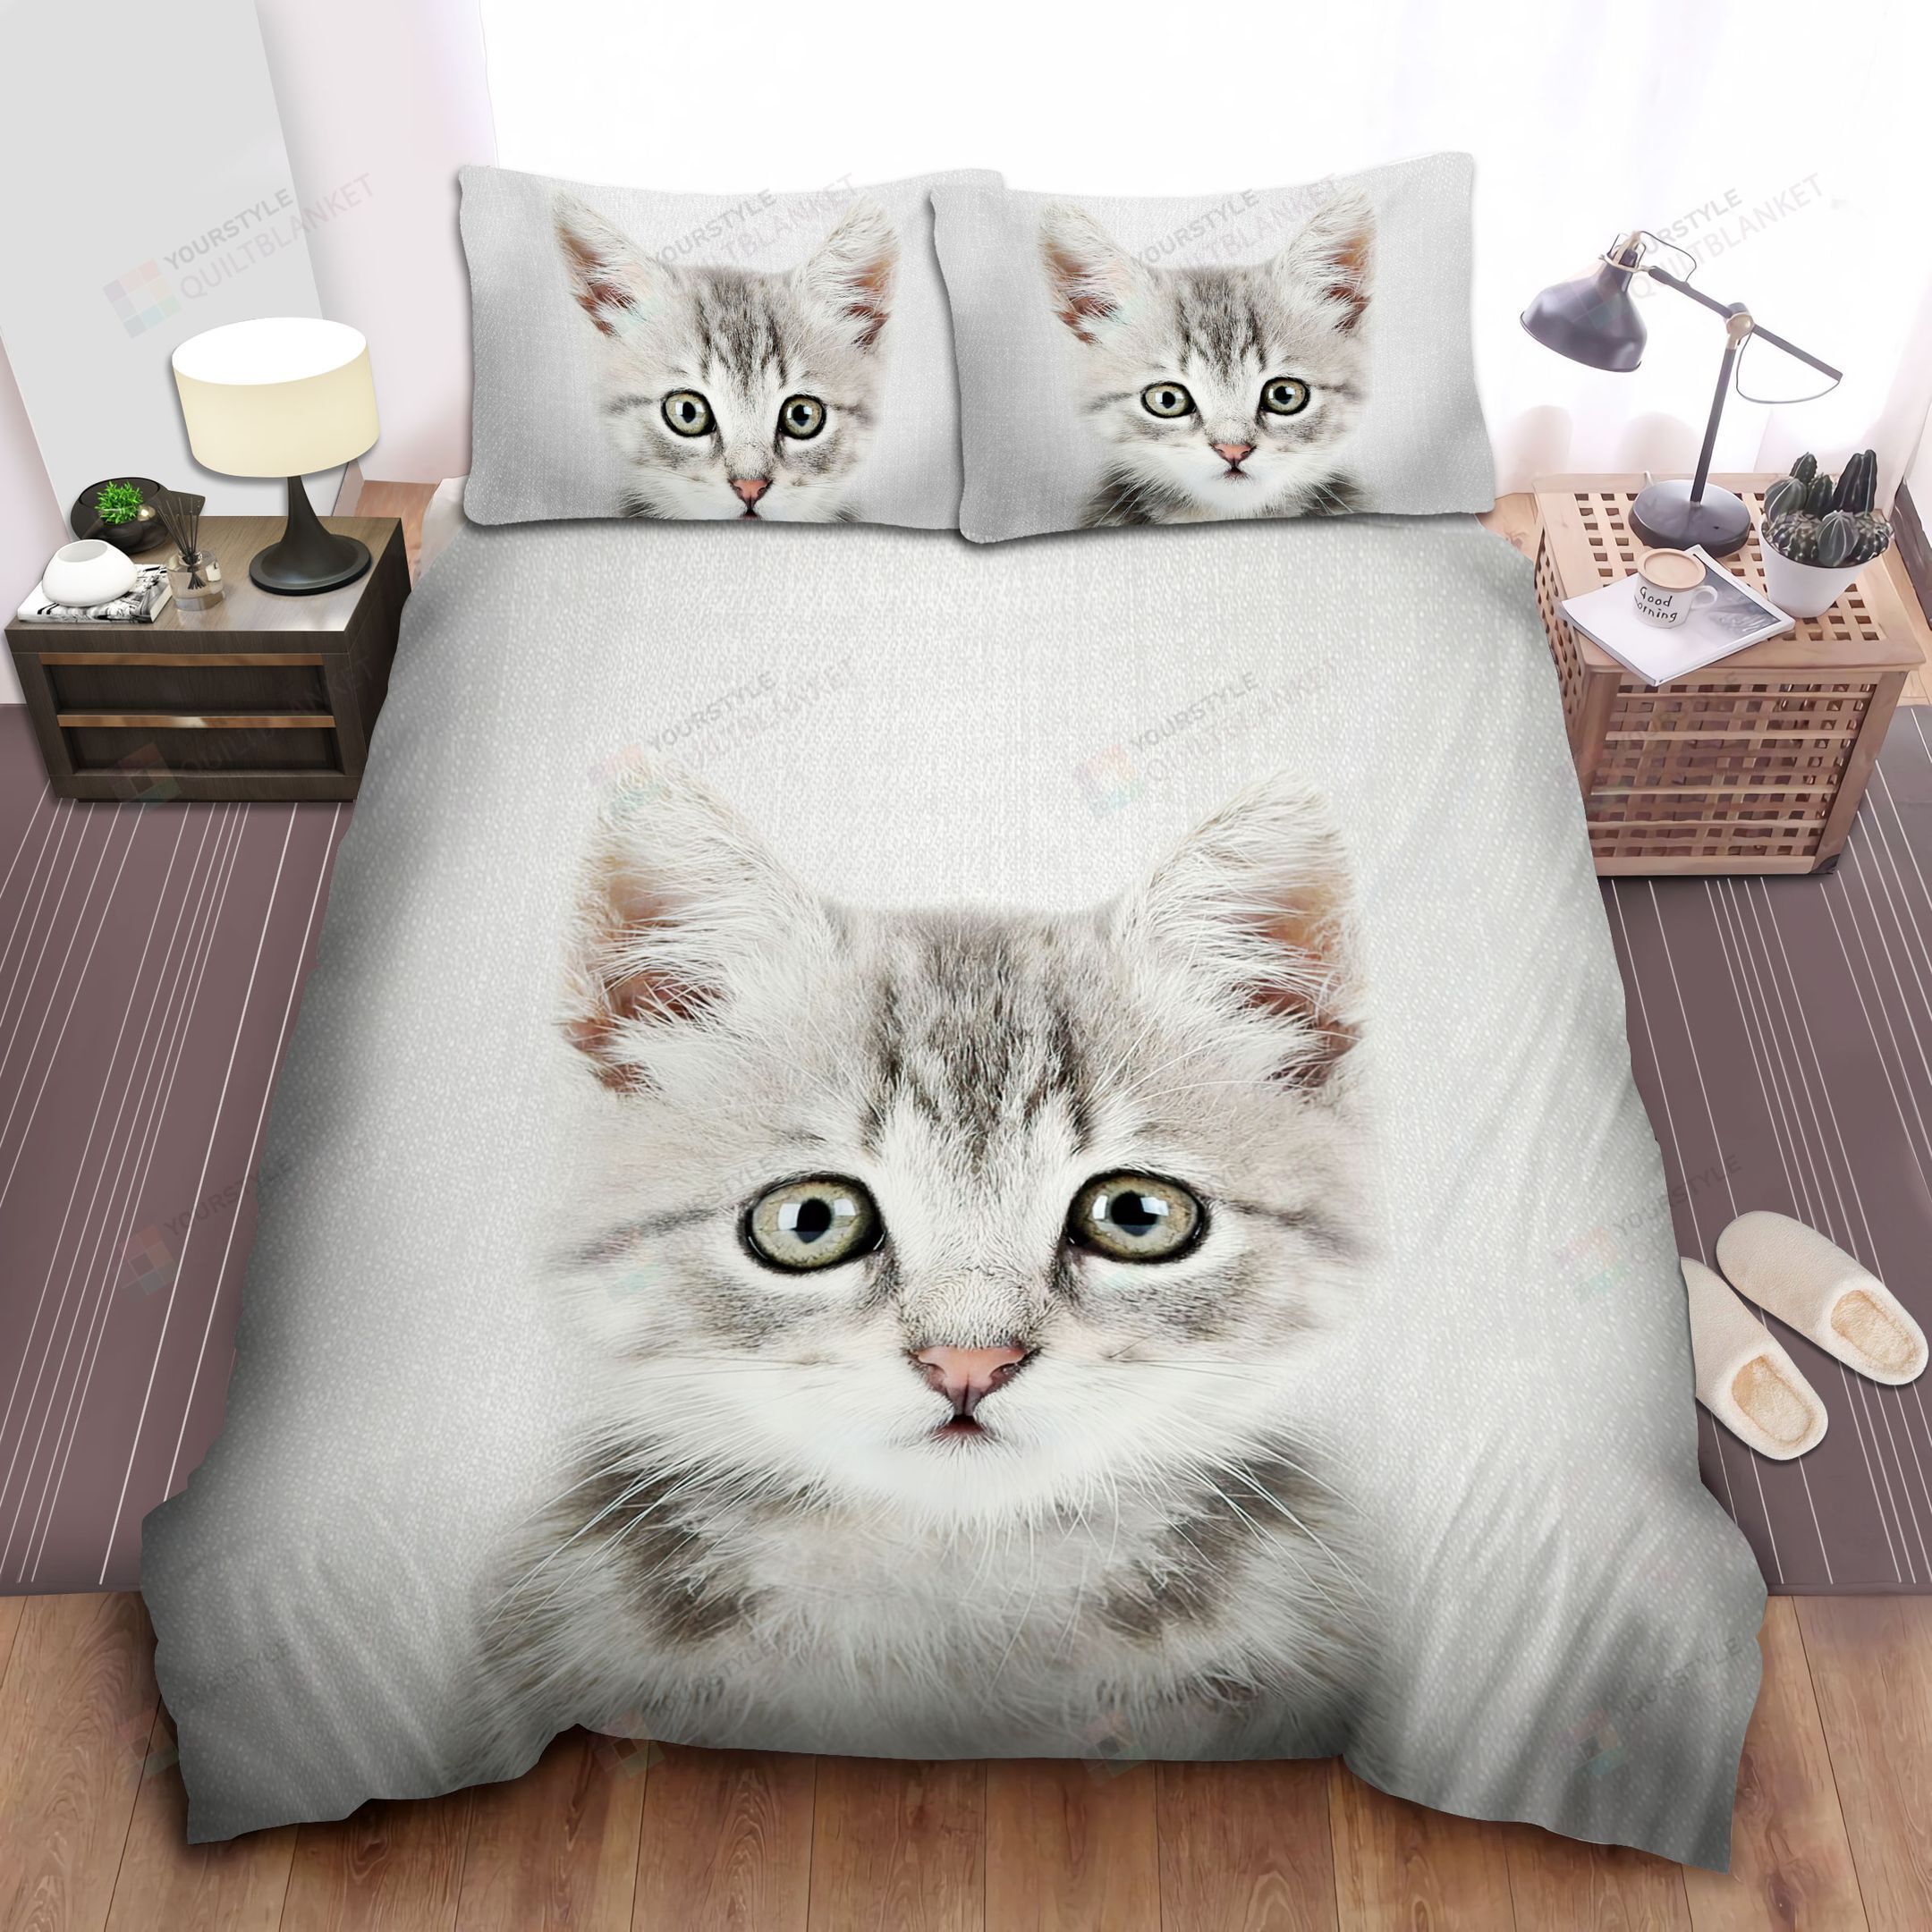 A Kitten Bed Sheets Spread Comforter Duvet Cover Bedding Sets